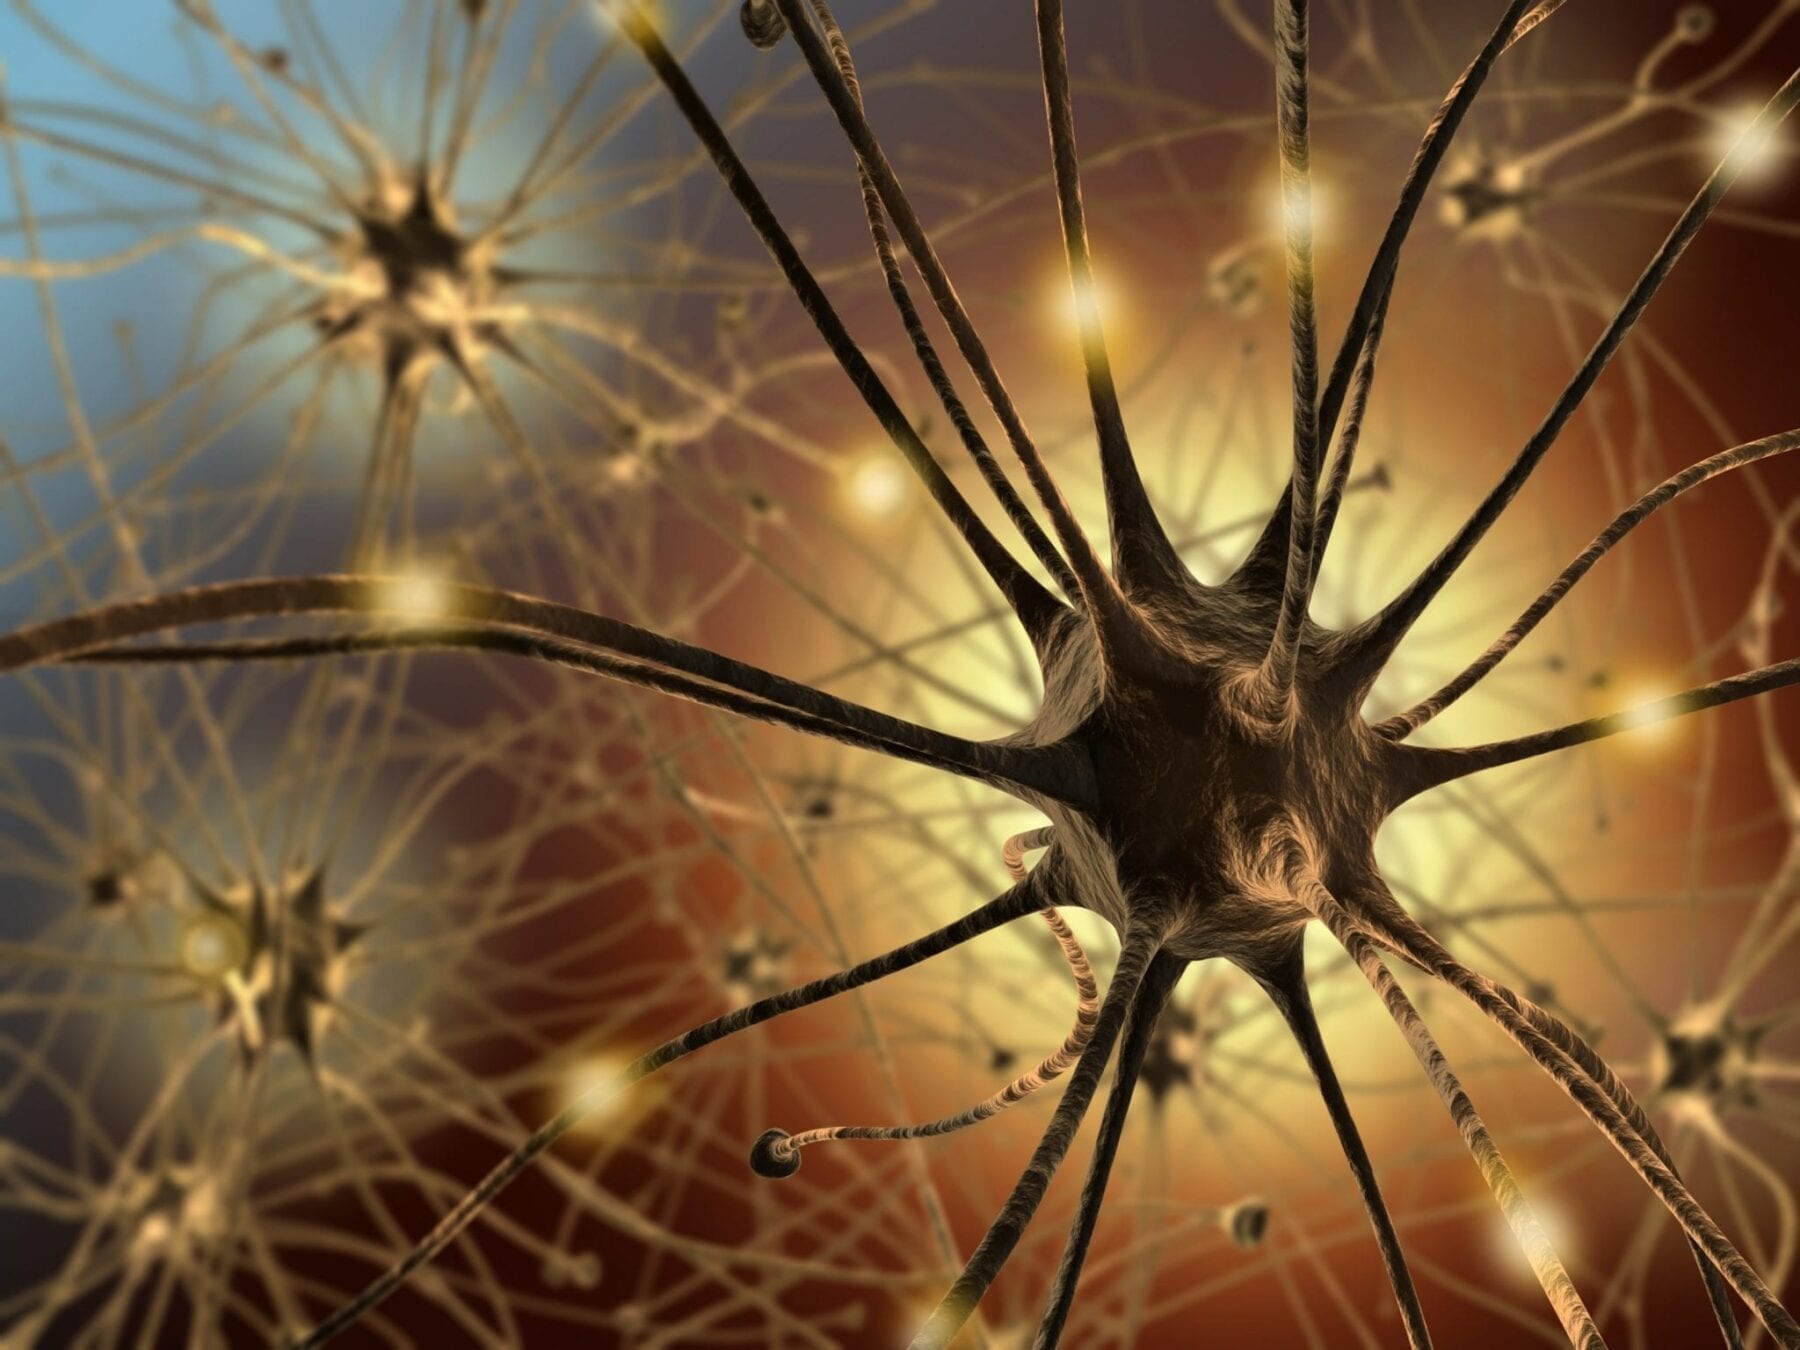 Artificial neurons: You've got a nerve